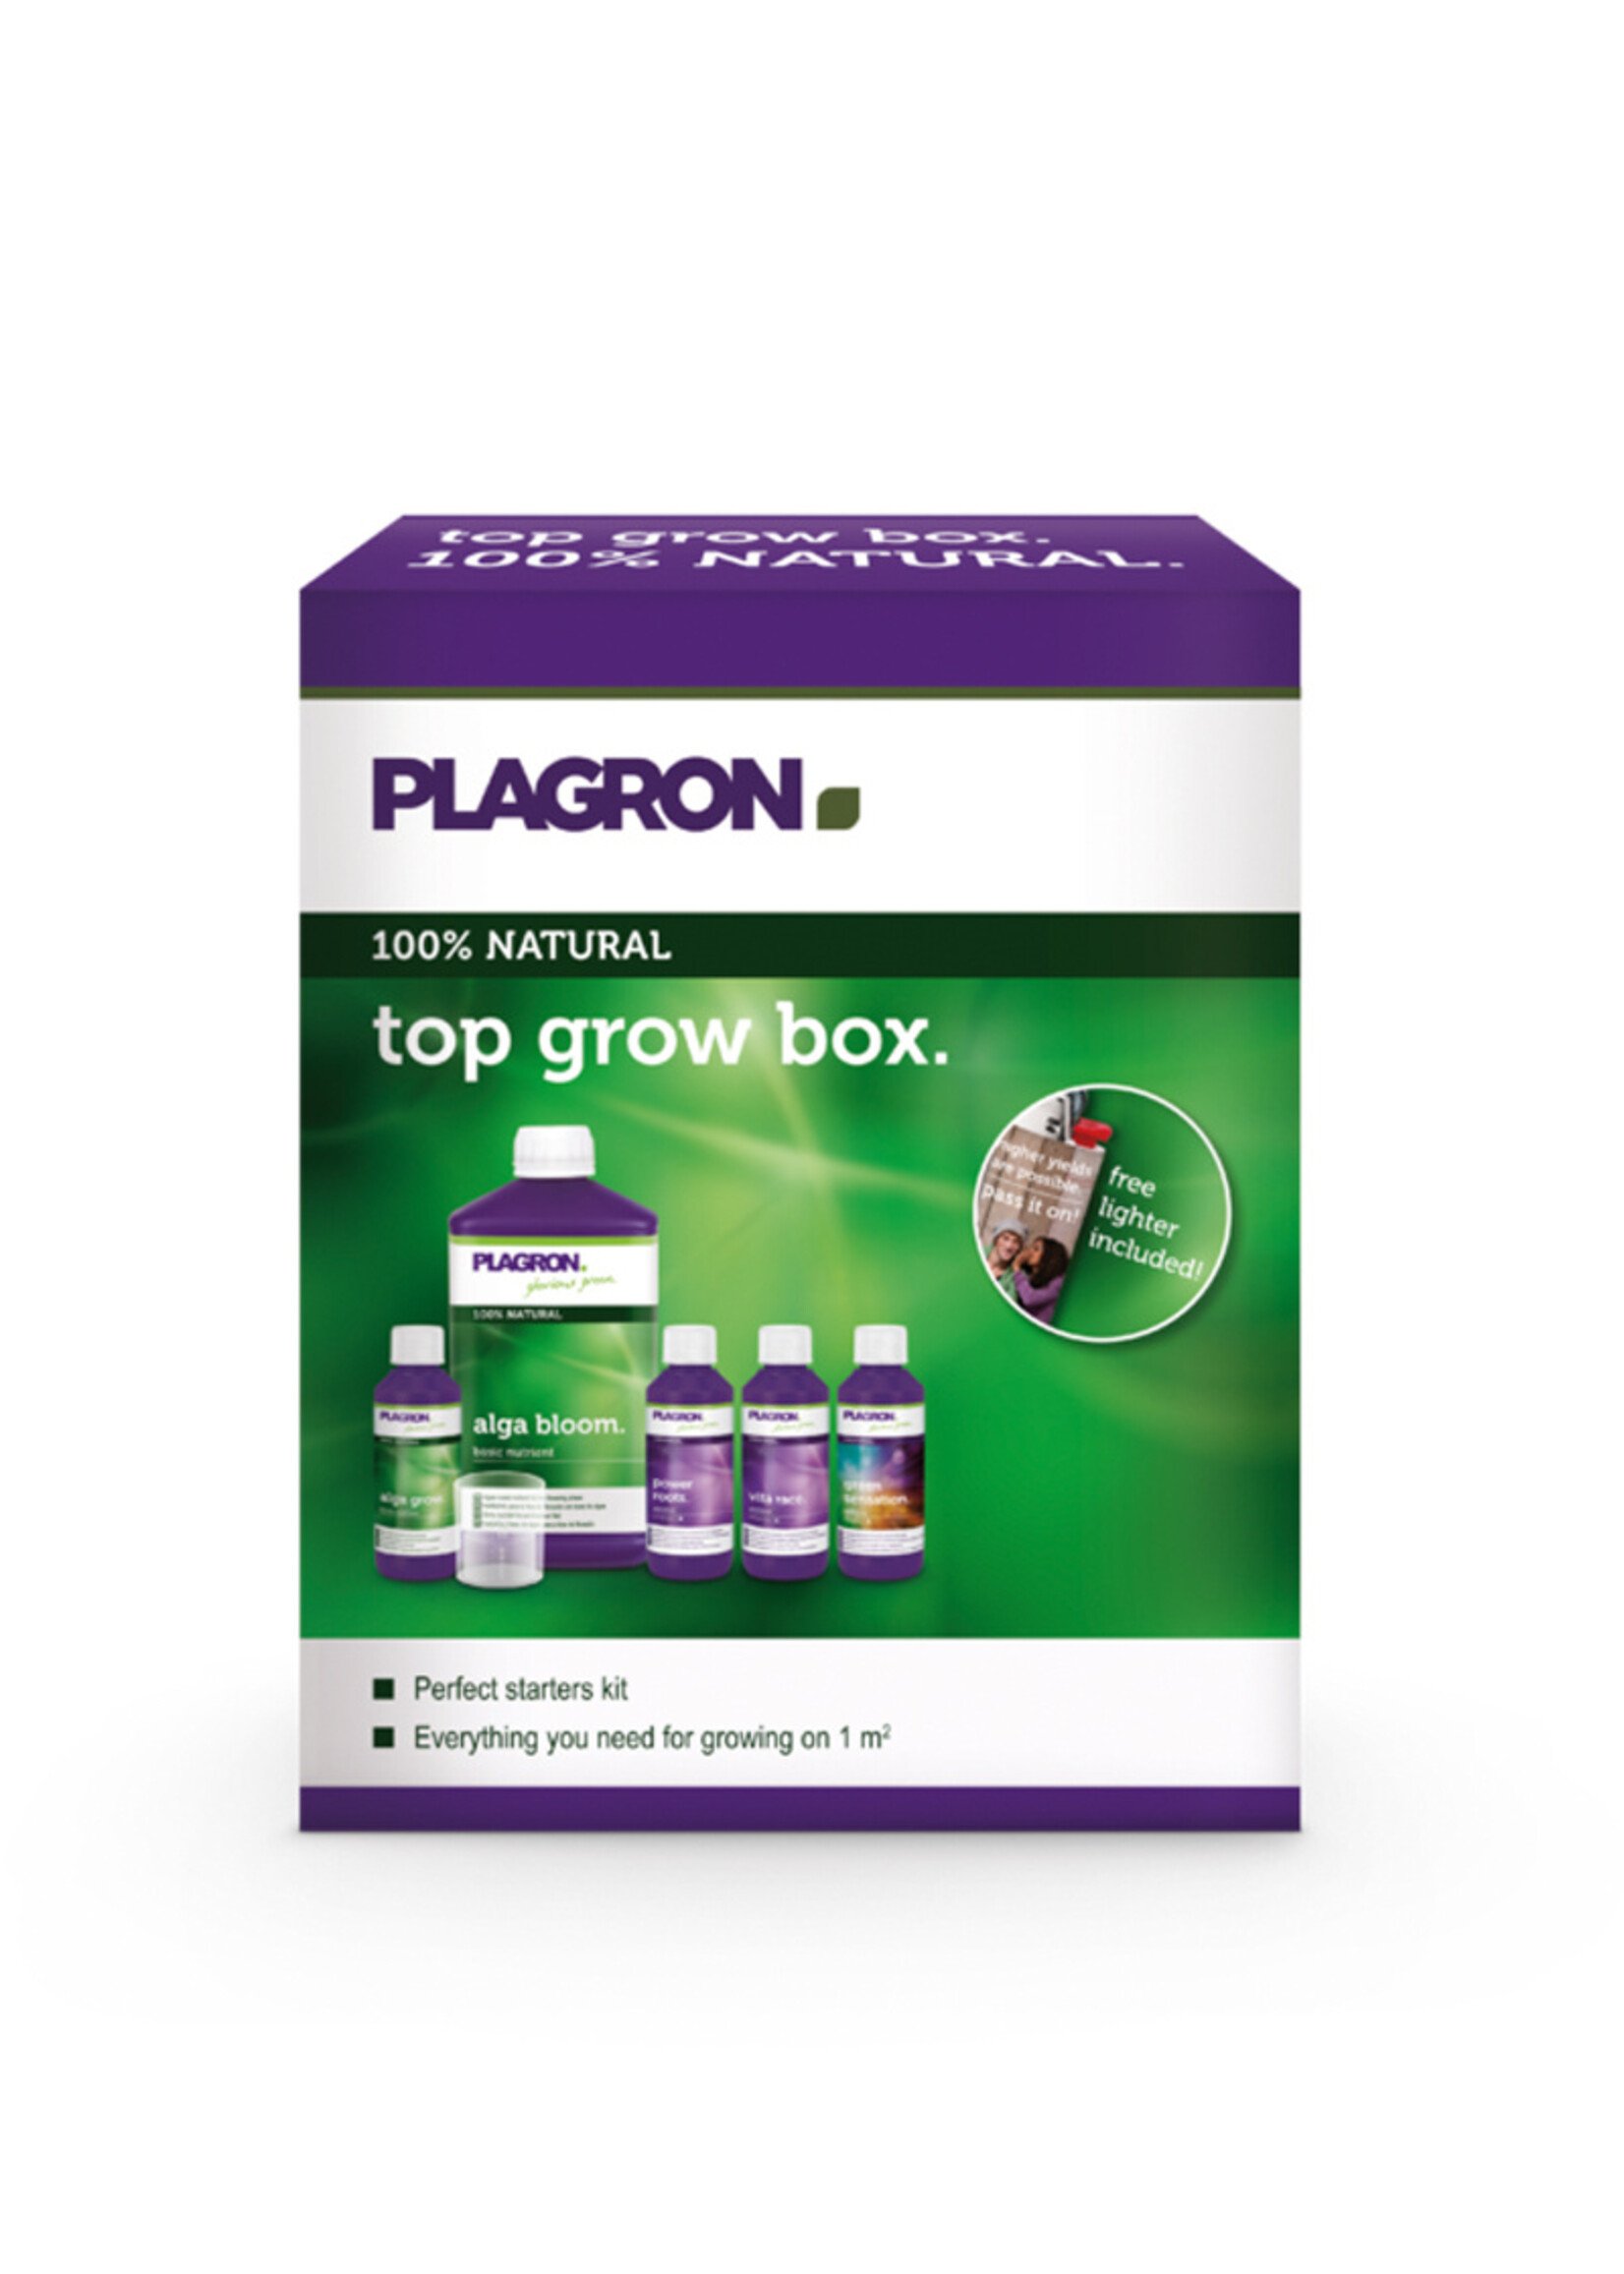 PLAGRON PLAGRON TOP GROW BOX 100% NATURAL